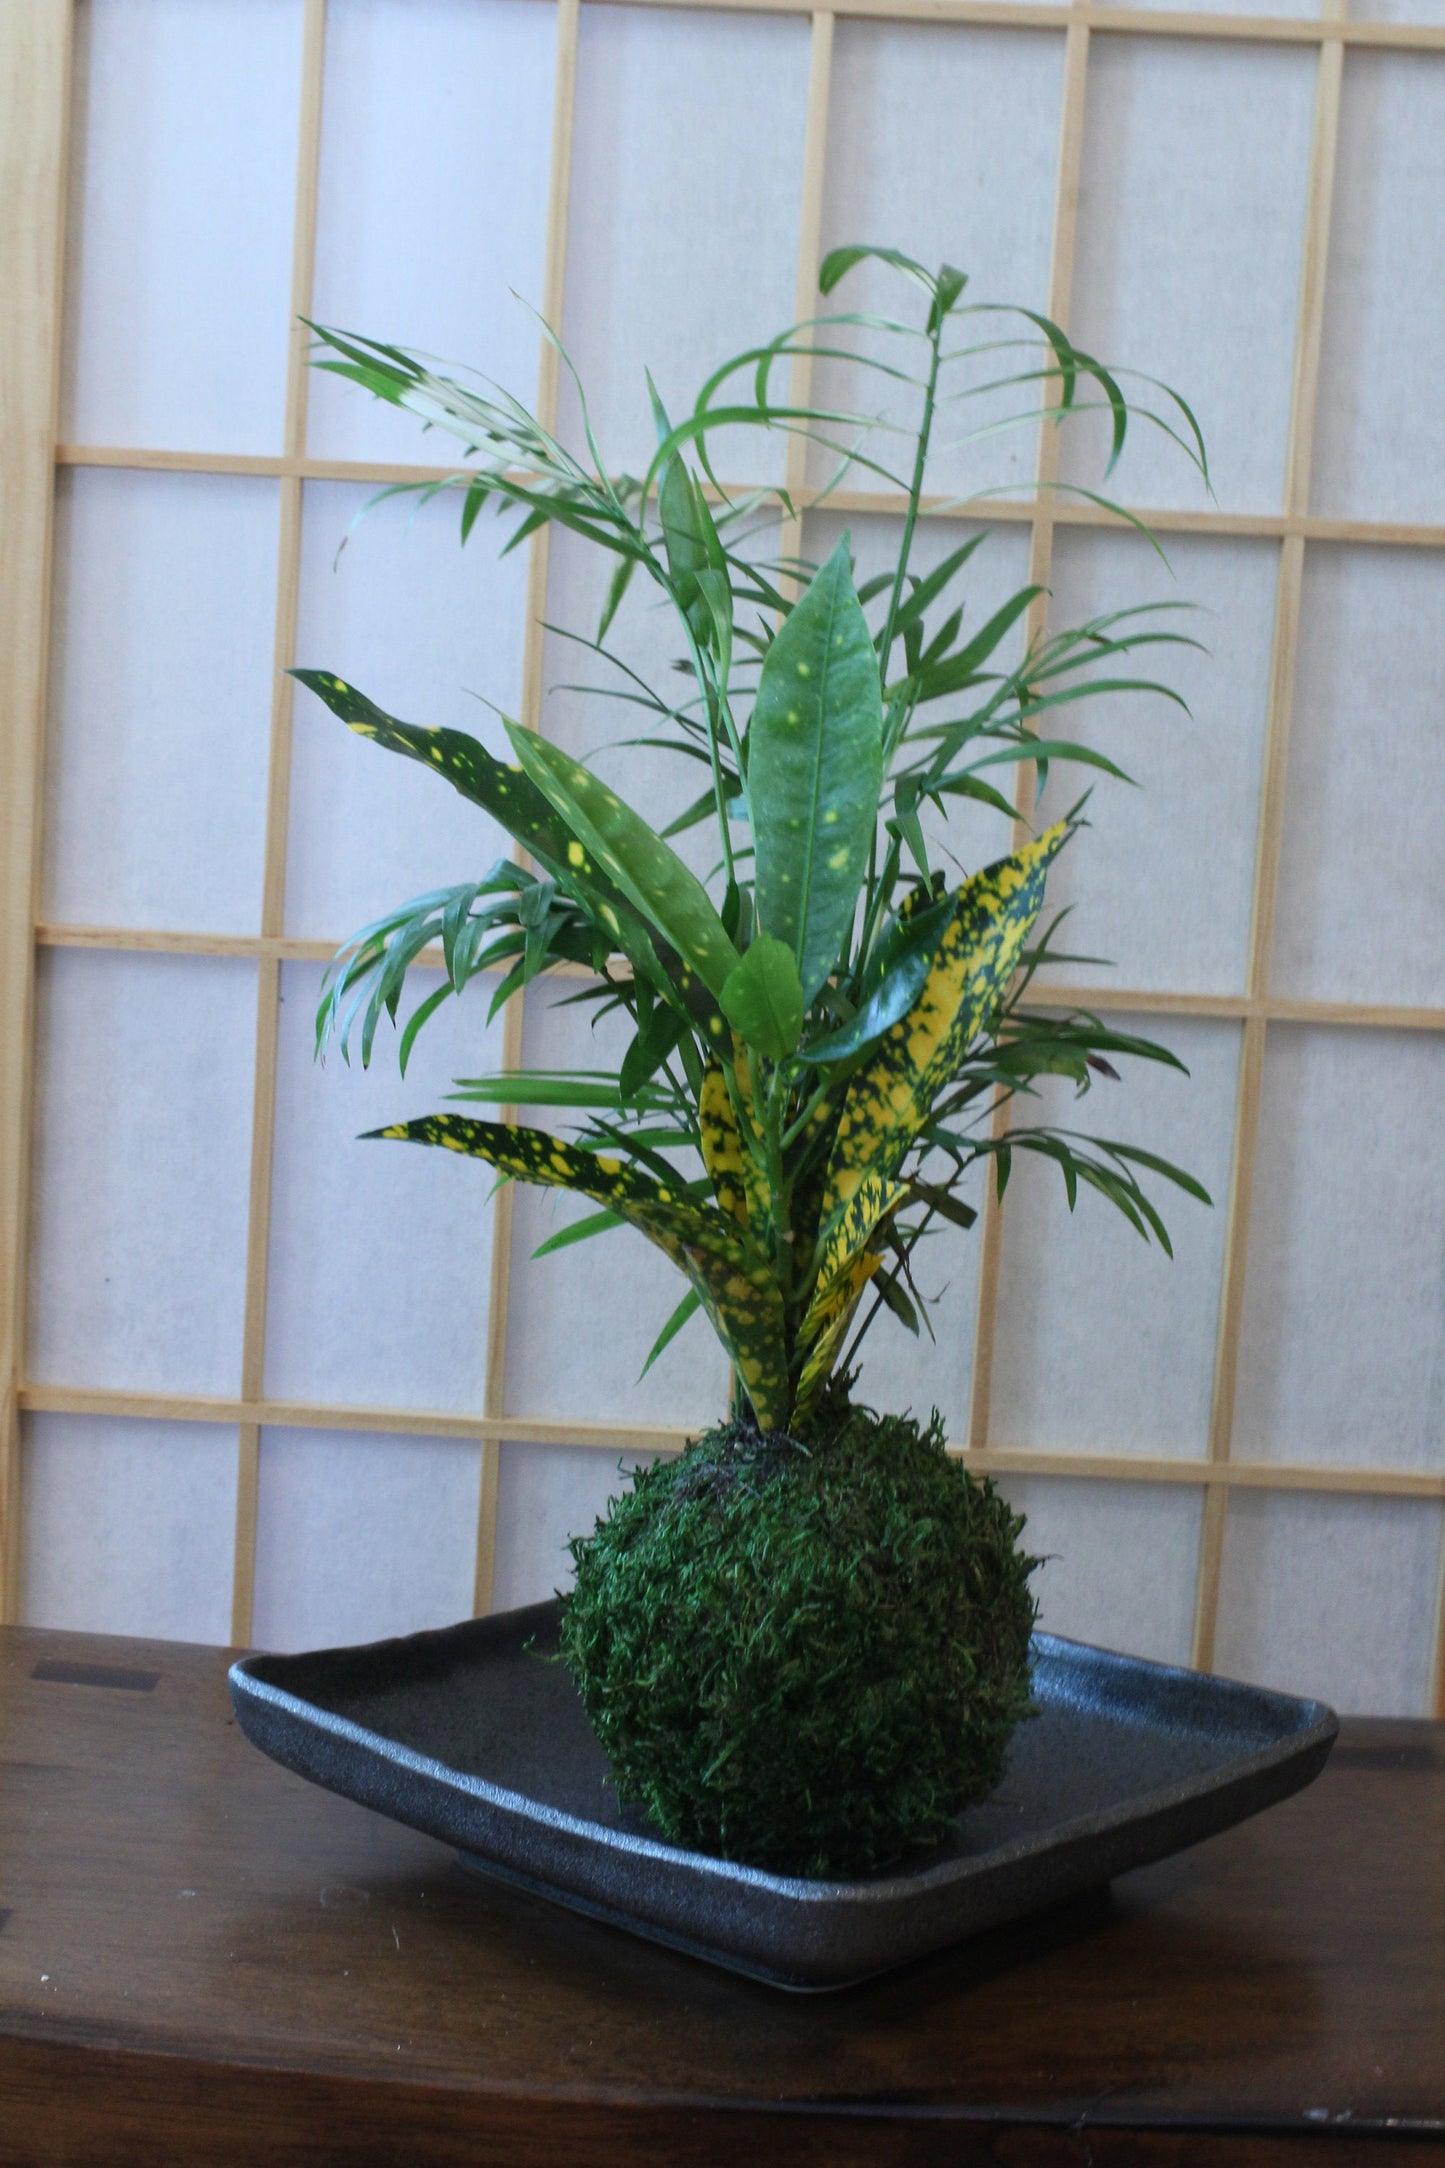 Parlor Palm and Croton arranged  Kokedama - Moss ball, Living Japanese art, spin off of Bonsai!